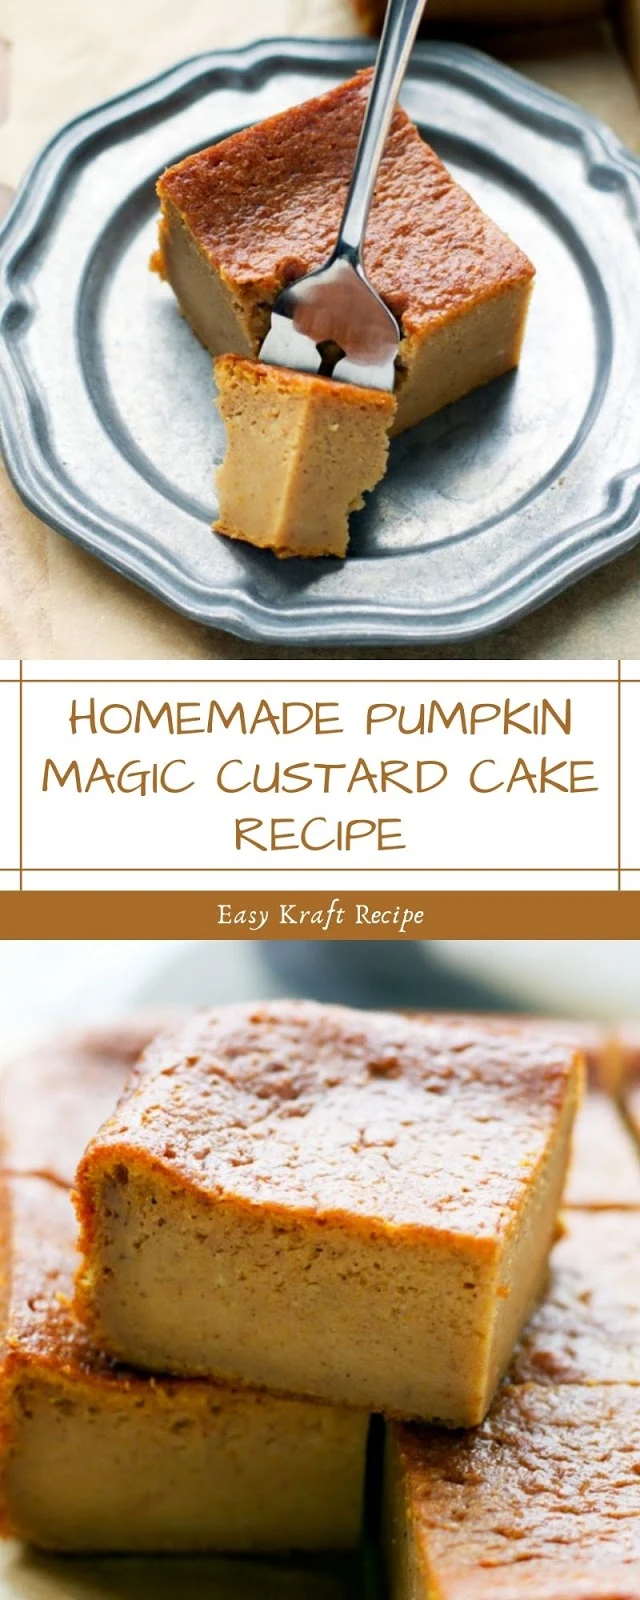 HOMEMADE PUMPKIN MAGIC CUSTARD CAKE RECIPE